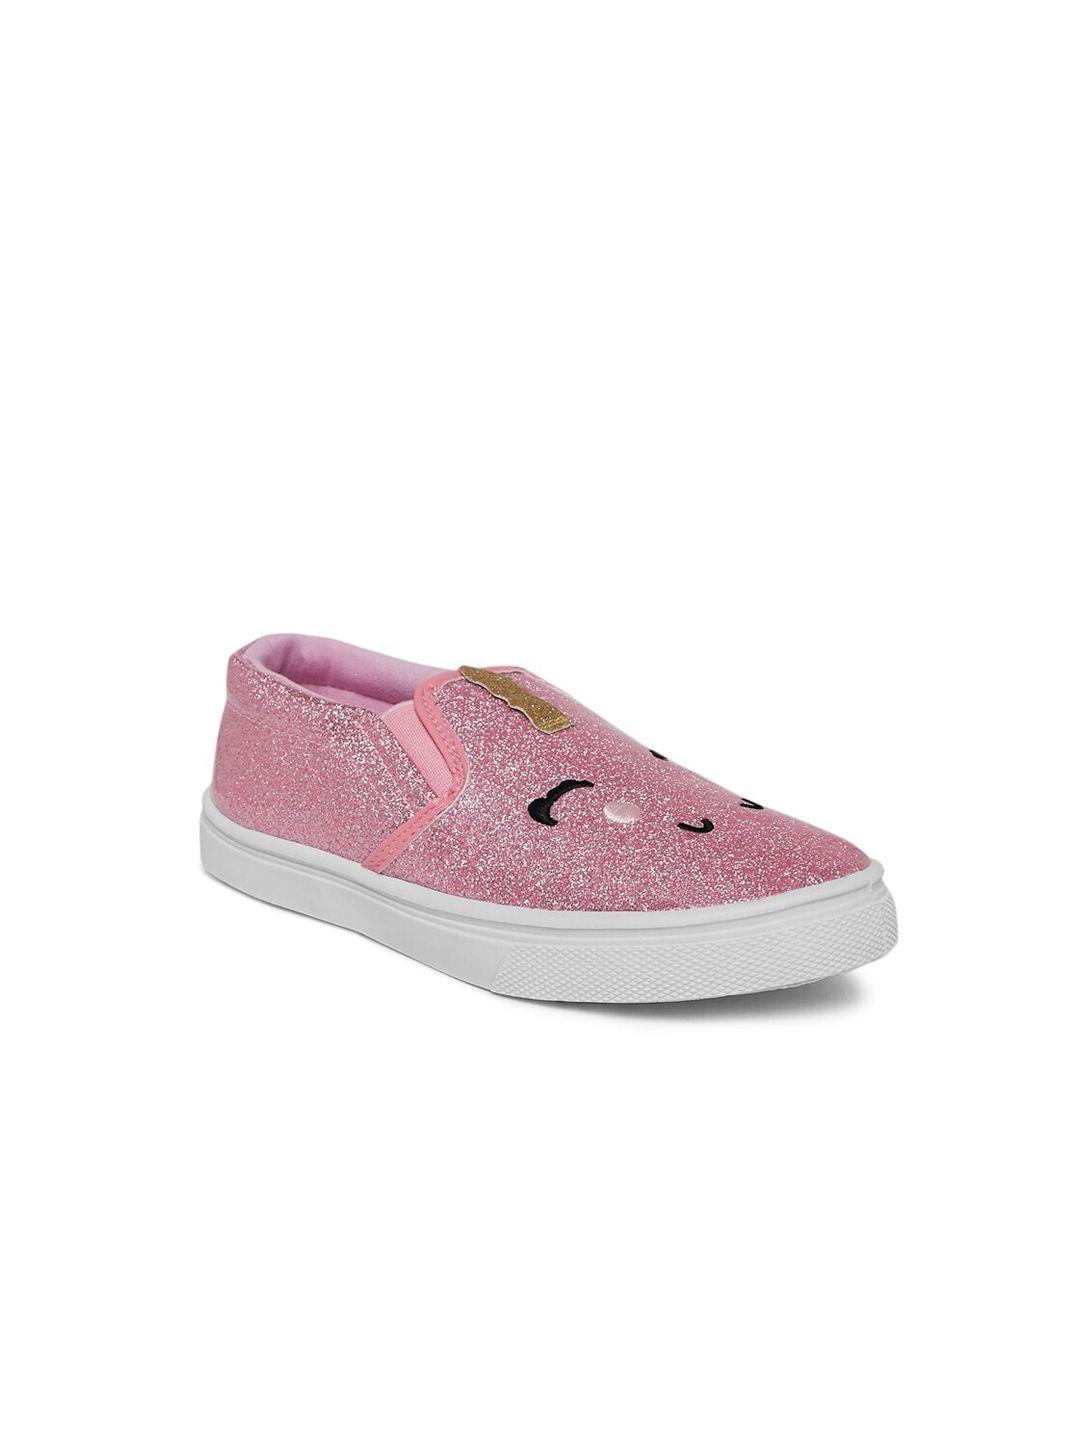 pantaloons junior girls pink textured pu slip-on sneakers